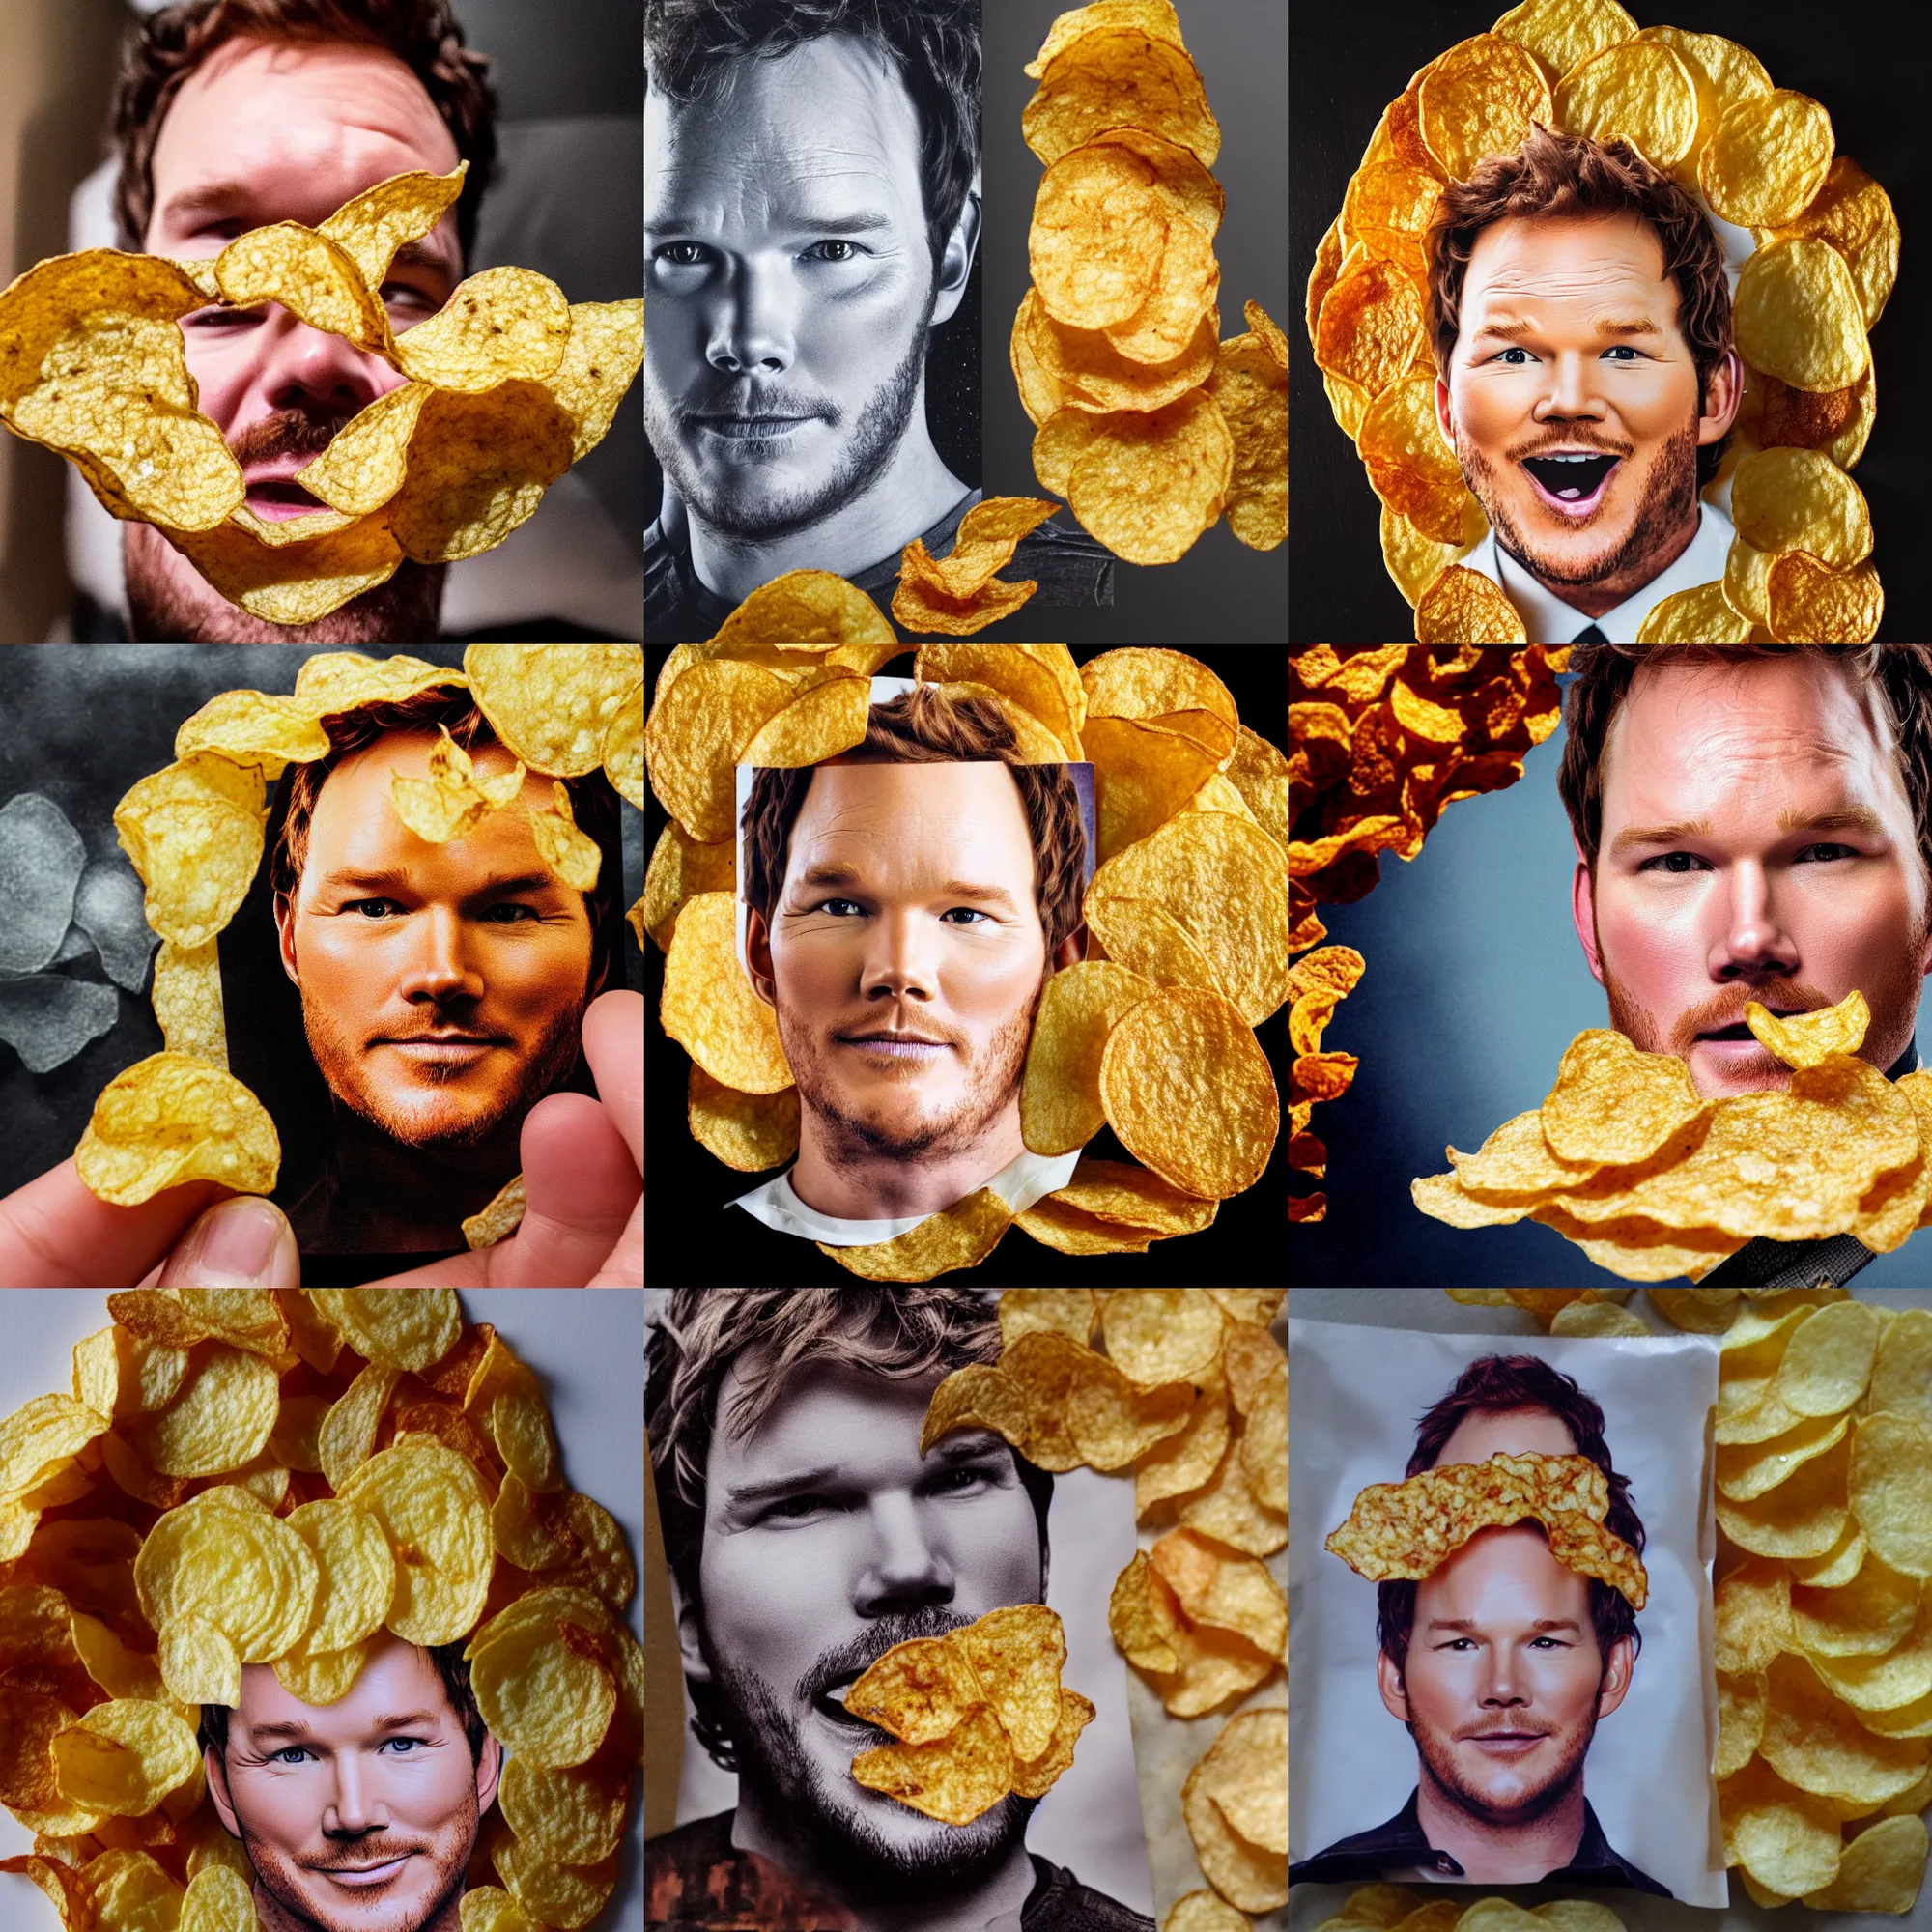 Prompt: single potato chip that looks like chris pratt, potato chip with chris pratt's face, crisps, macro shot, high detail photo, close up, cute, adorable